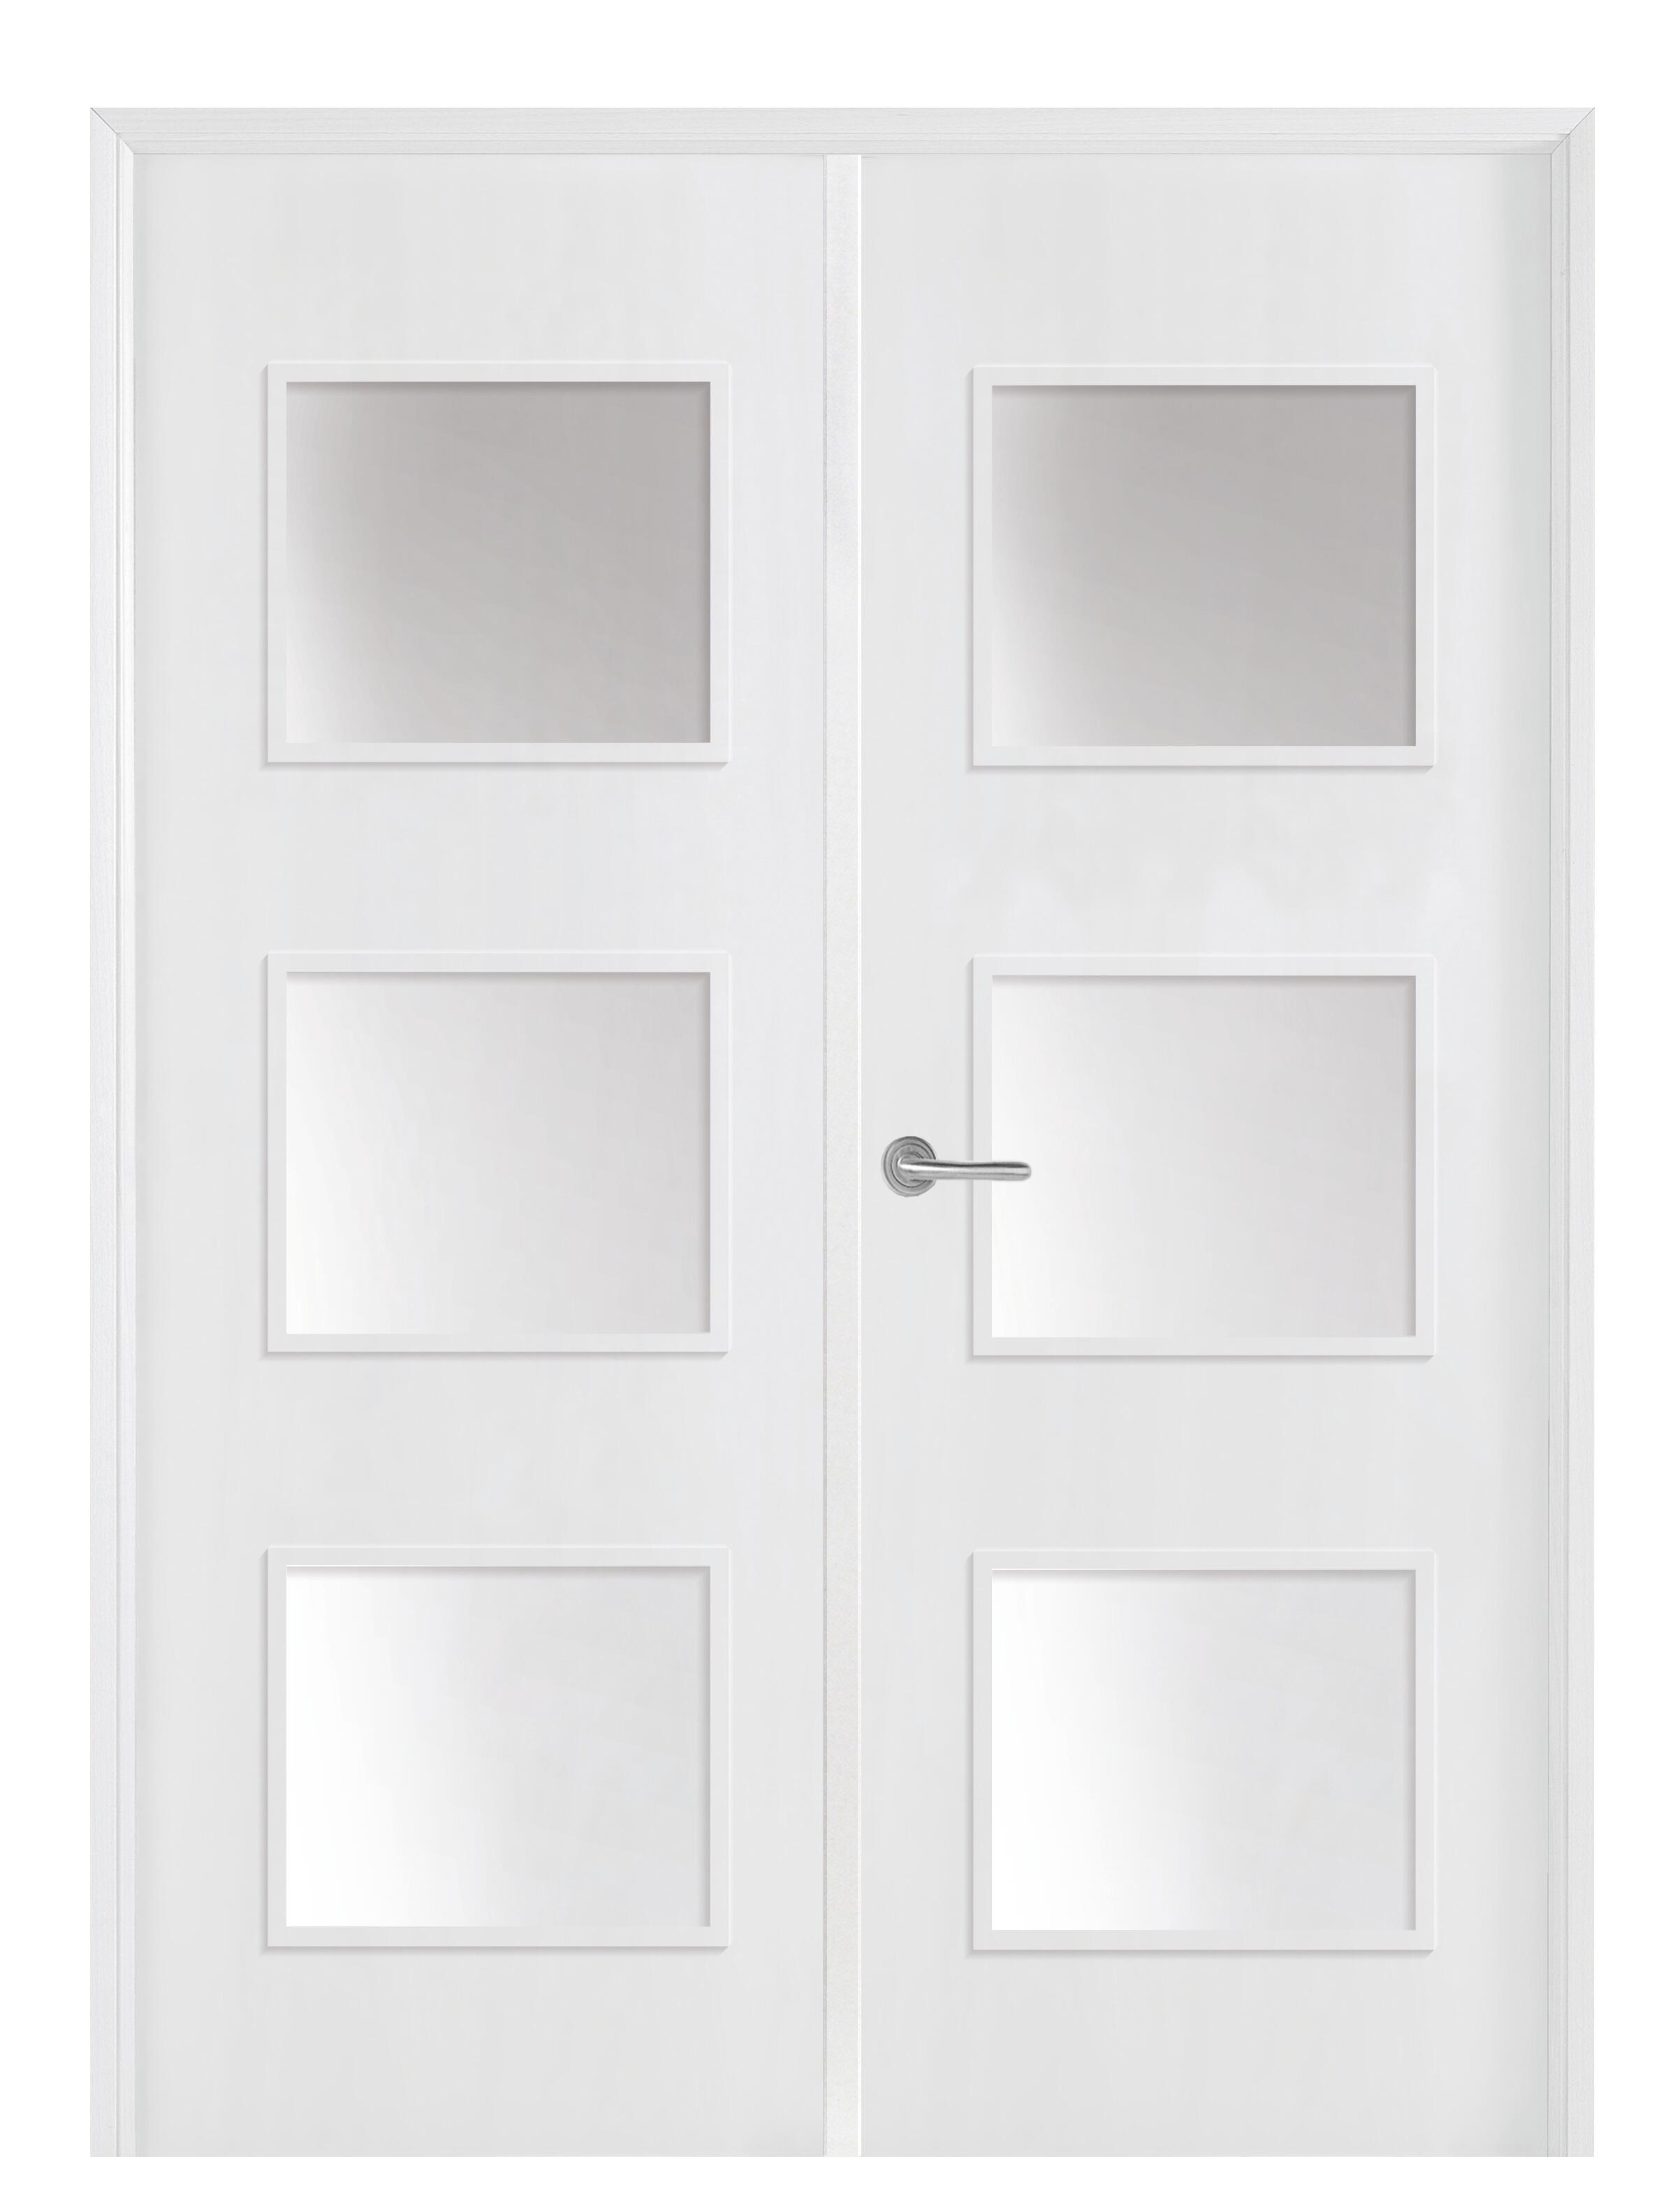 Puerta doble con cristal bari plus blanca 9x125cm (62+62) d